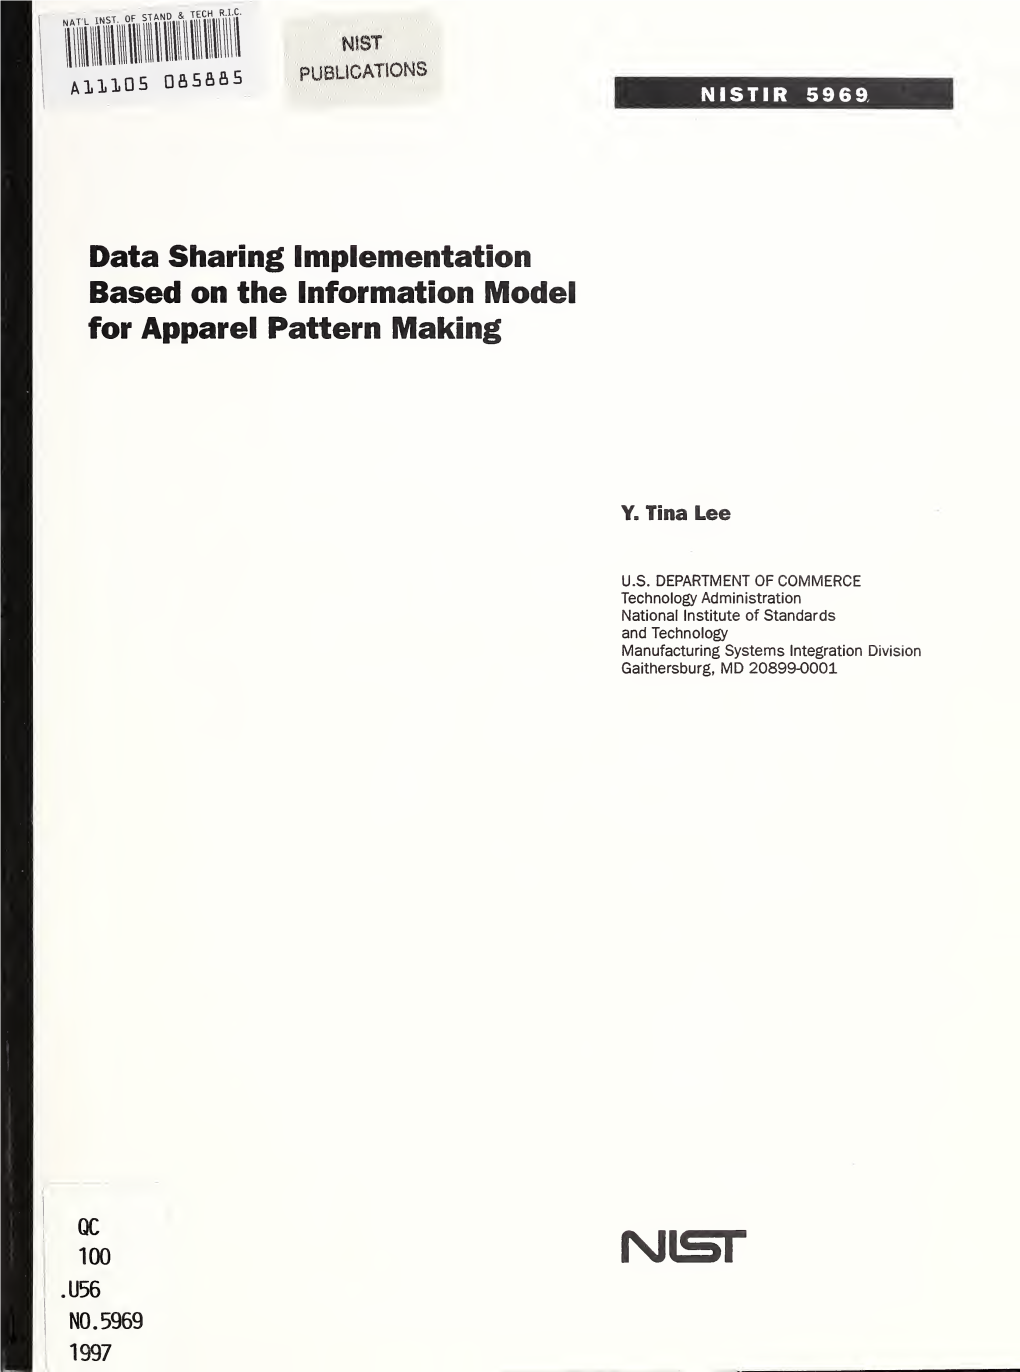 Data Sharing Implementation Based on the Information Model for Apparel Pattern Making